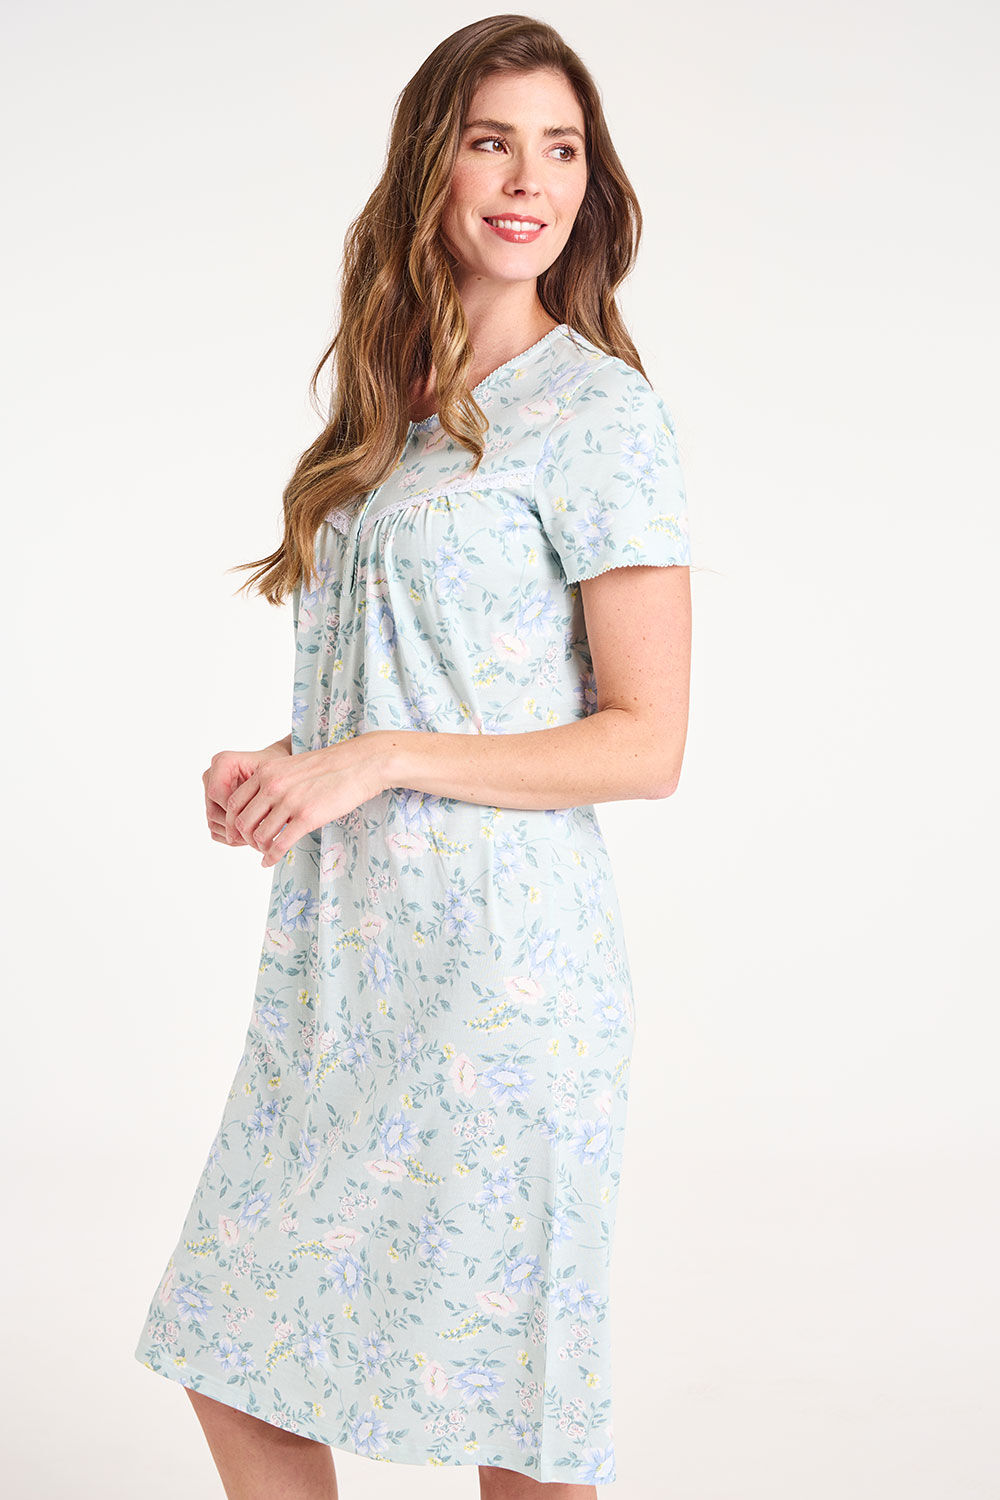 Bonmarche Aqua 100% Cotton Short Sleeve Floral Print Jersey Nightdress, Size: 08-10